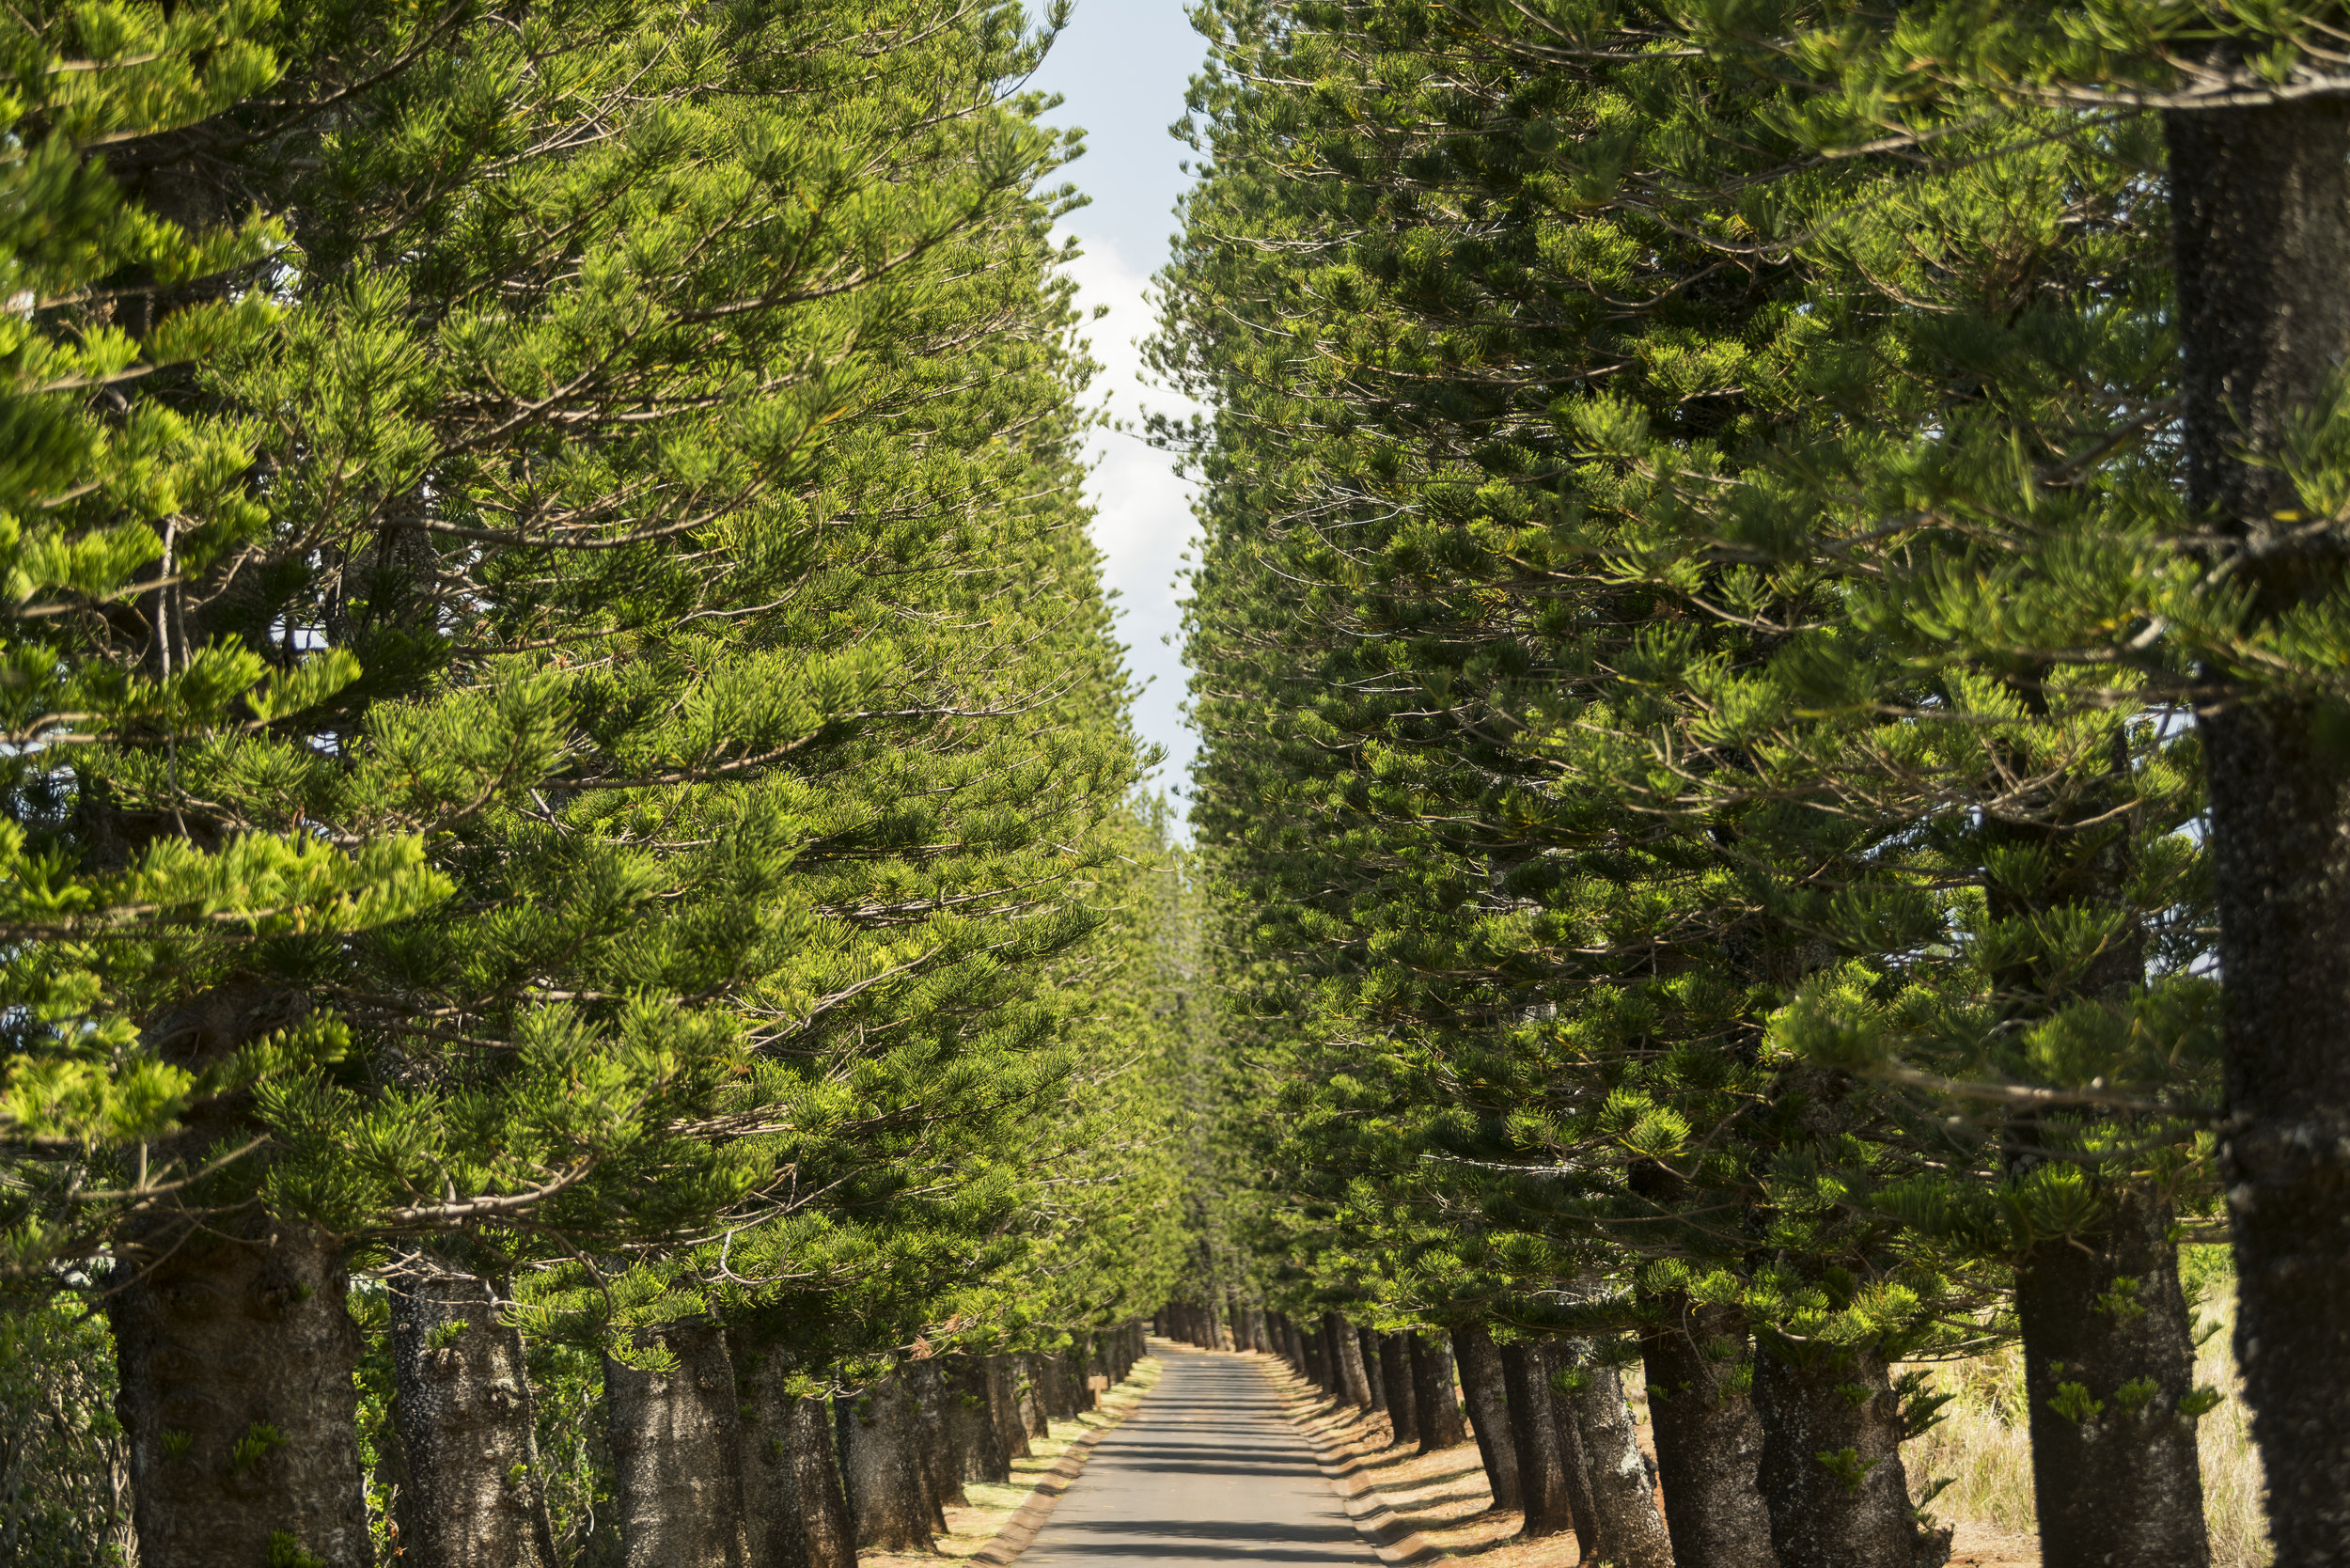 Kapalua Cook Pines.jpg